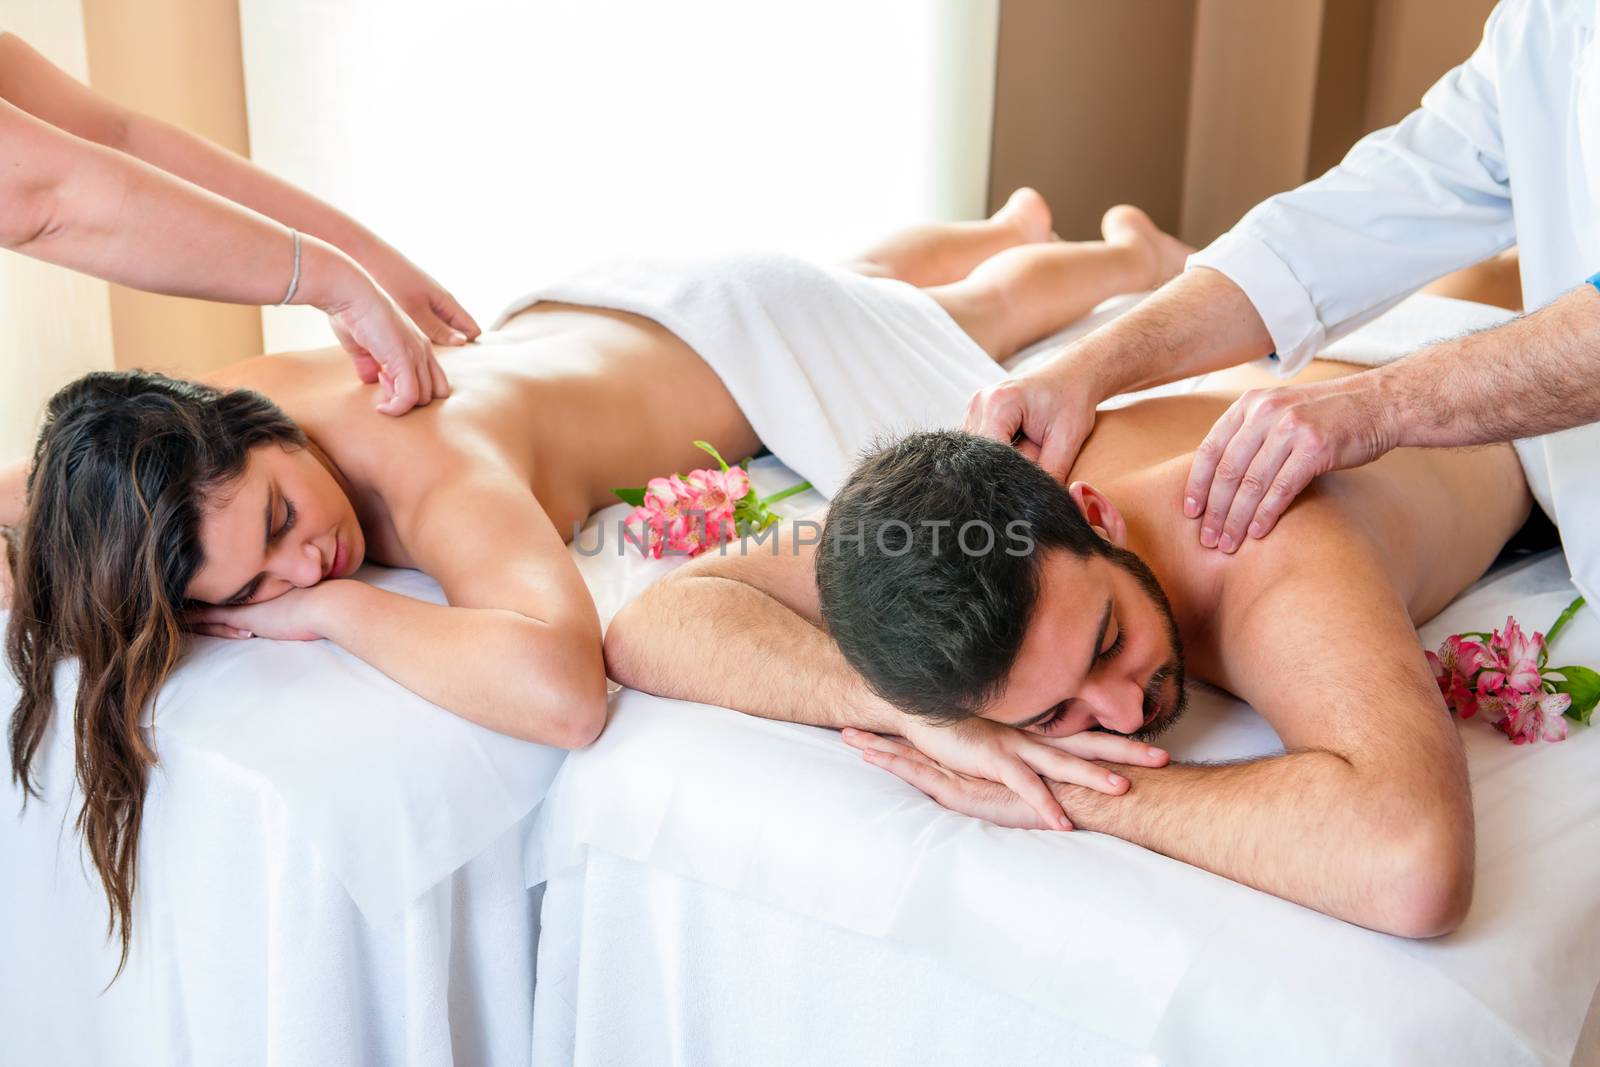 Couple enjoying body massage in spa. by karelnoppe